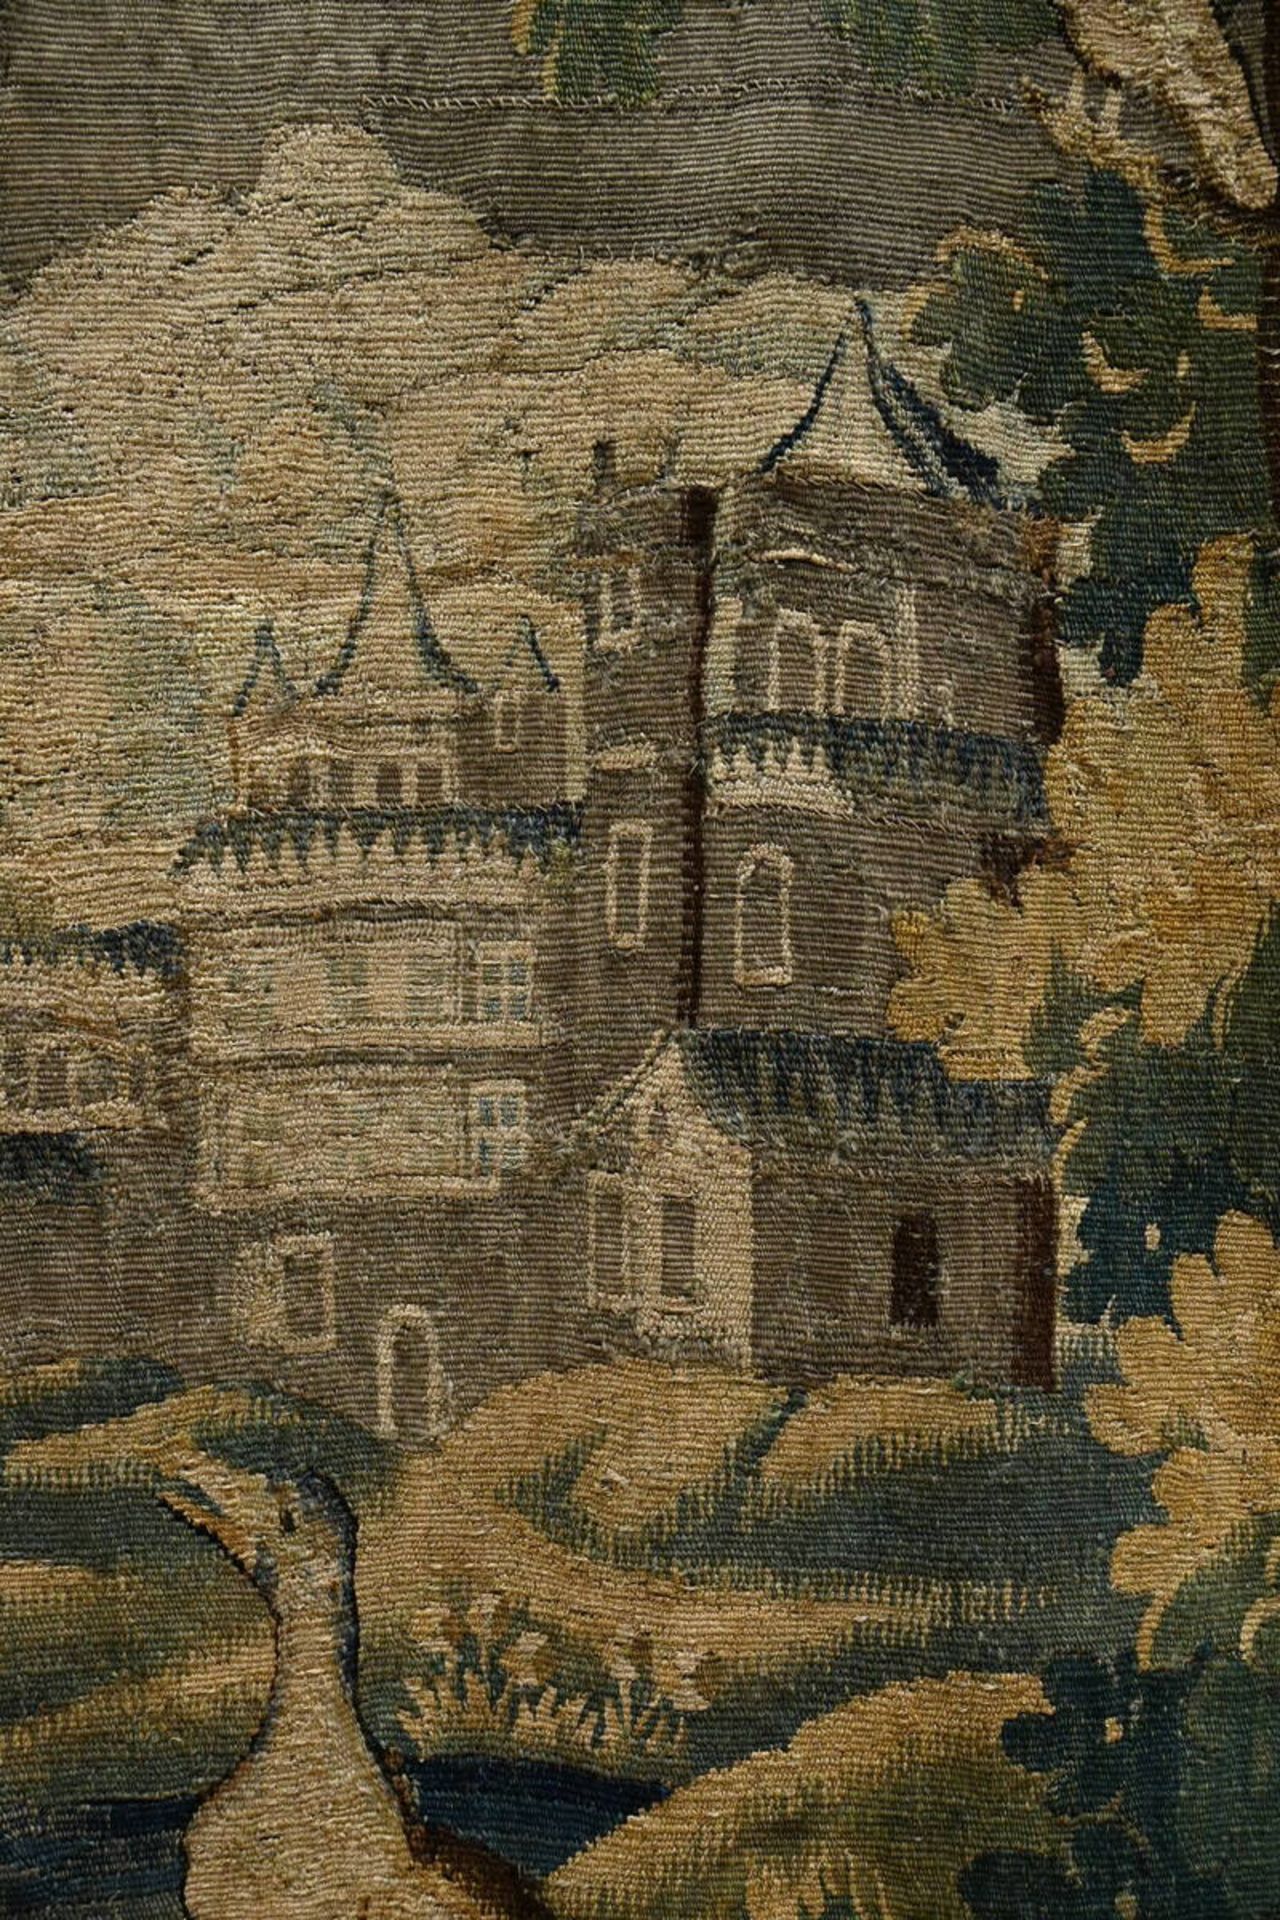 Tapestry 'greenery with birds', Oudenaarde 17th century (238x217cm) - Bild 3 aus 6